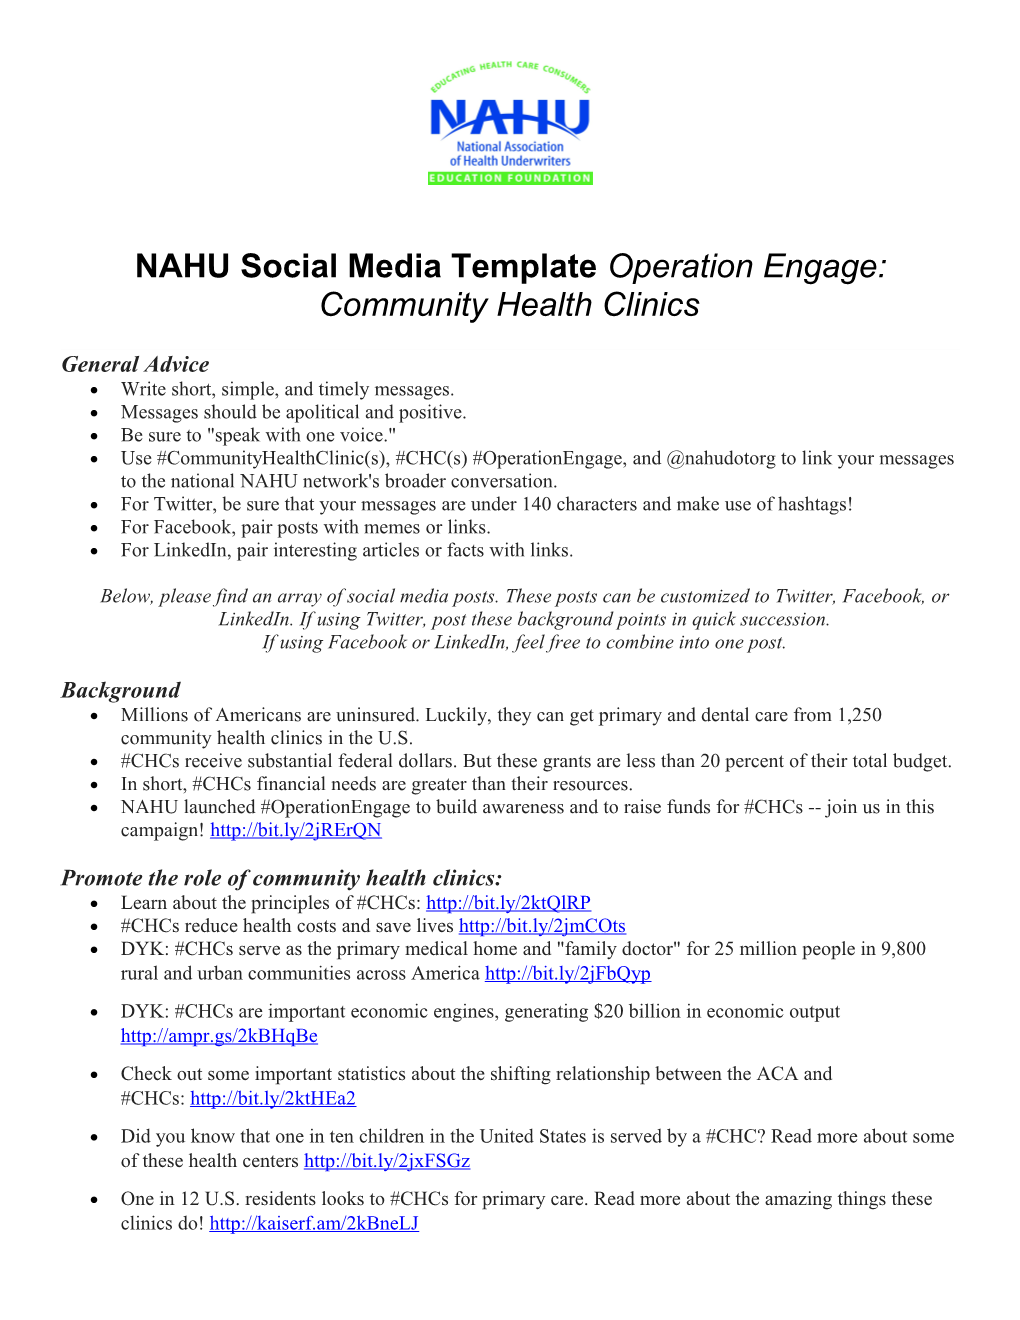 NAHU Social Media Template Operation Engage:Community Health Clinics